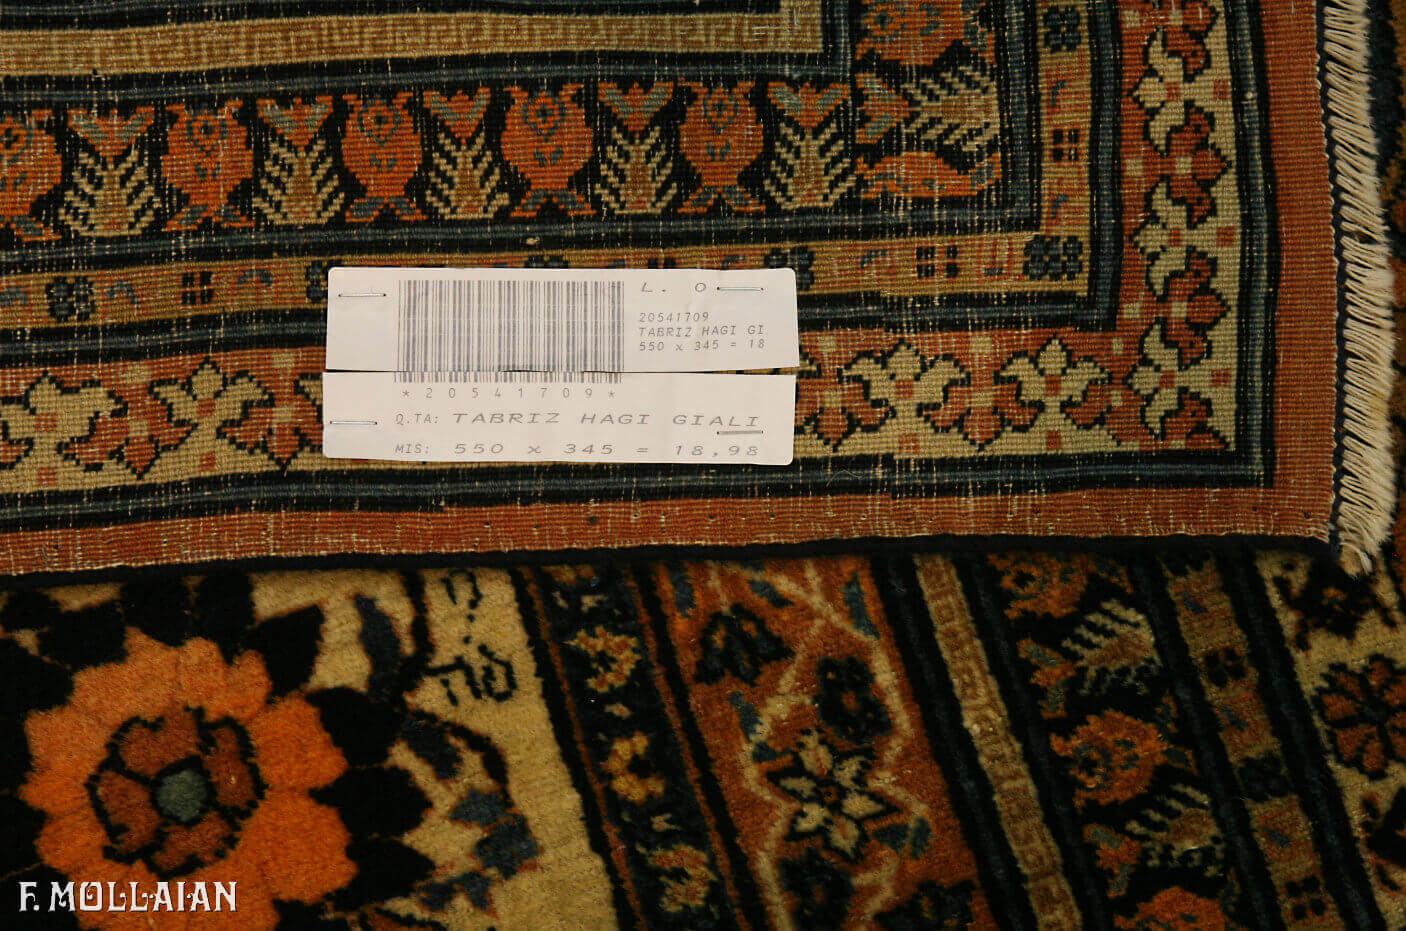 A Larg Antique Persian Tabriz Hadji Djalili Carpet n°:20541709